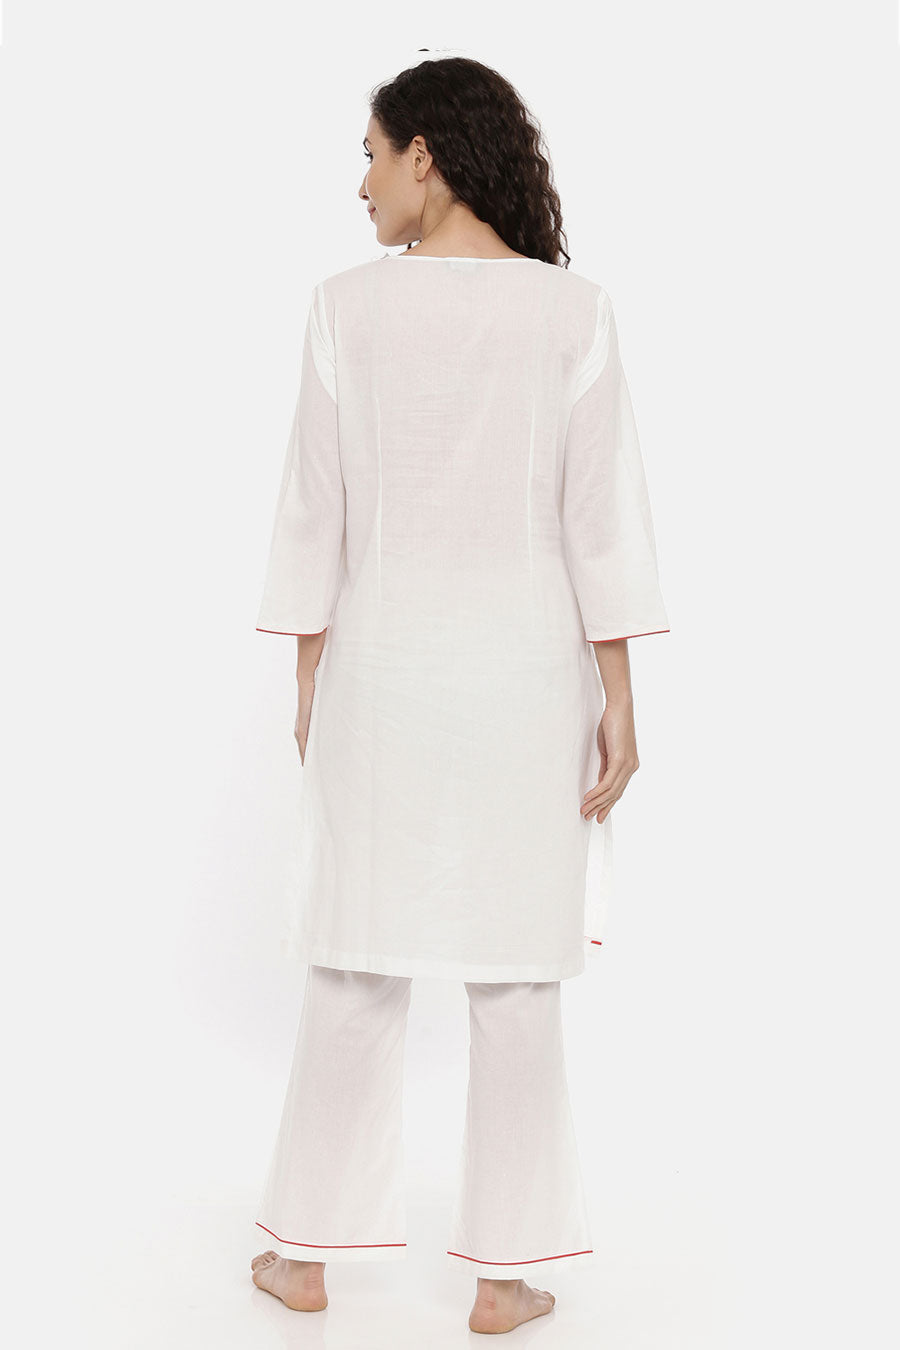 White Kura, Pant & Overlay Nightwear Set